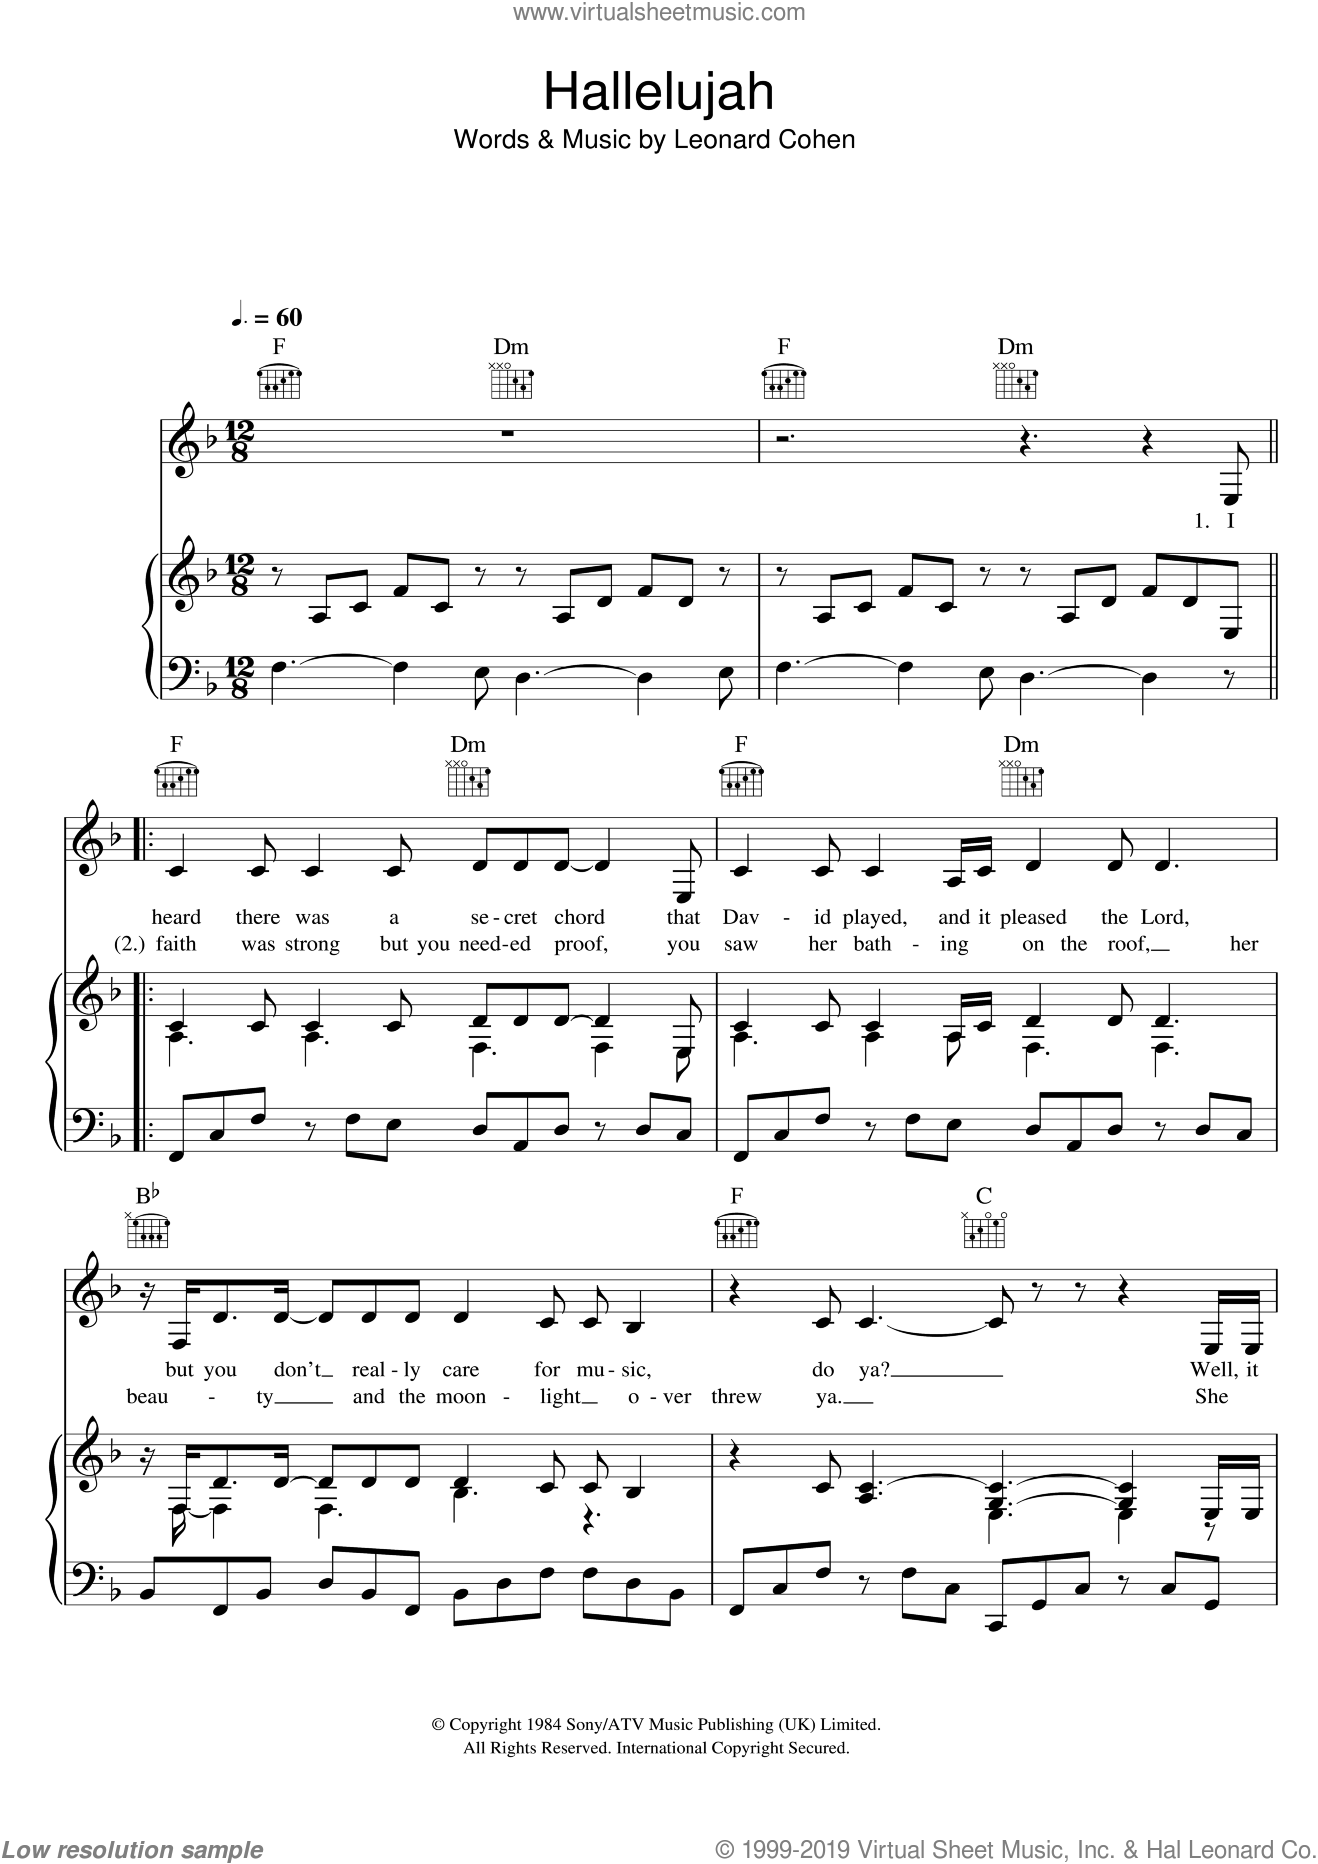 Burke - Hallelujah sheet music for voice, piano or guitar [PDF]